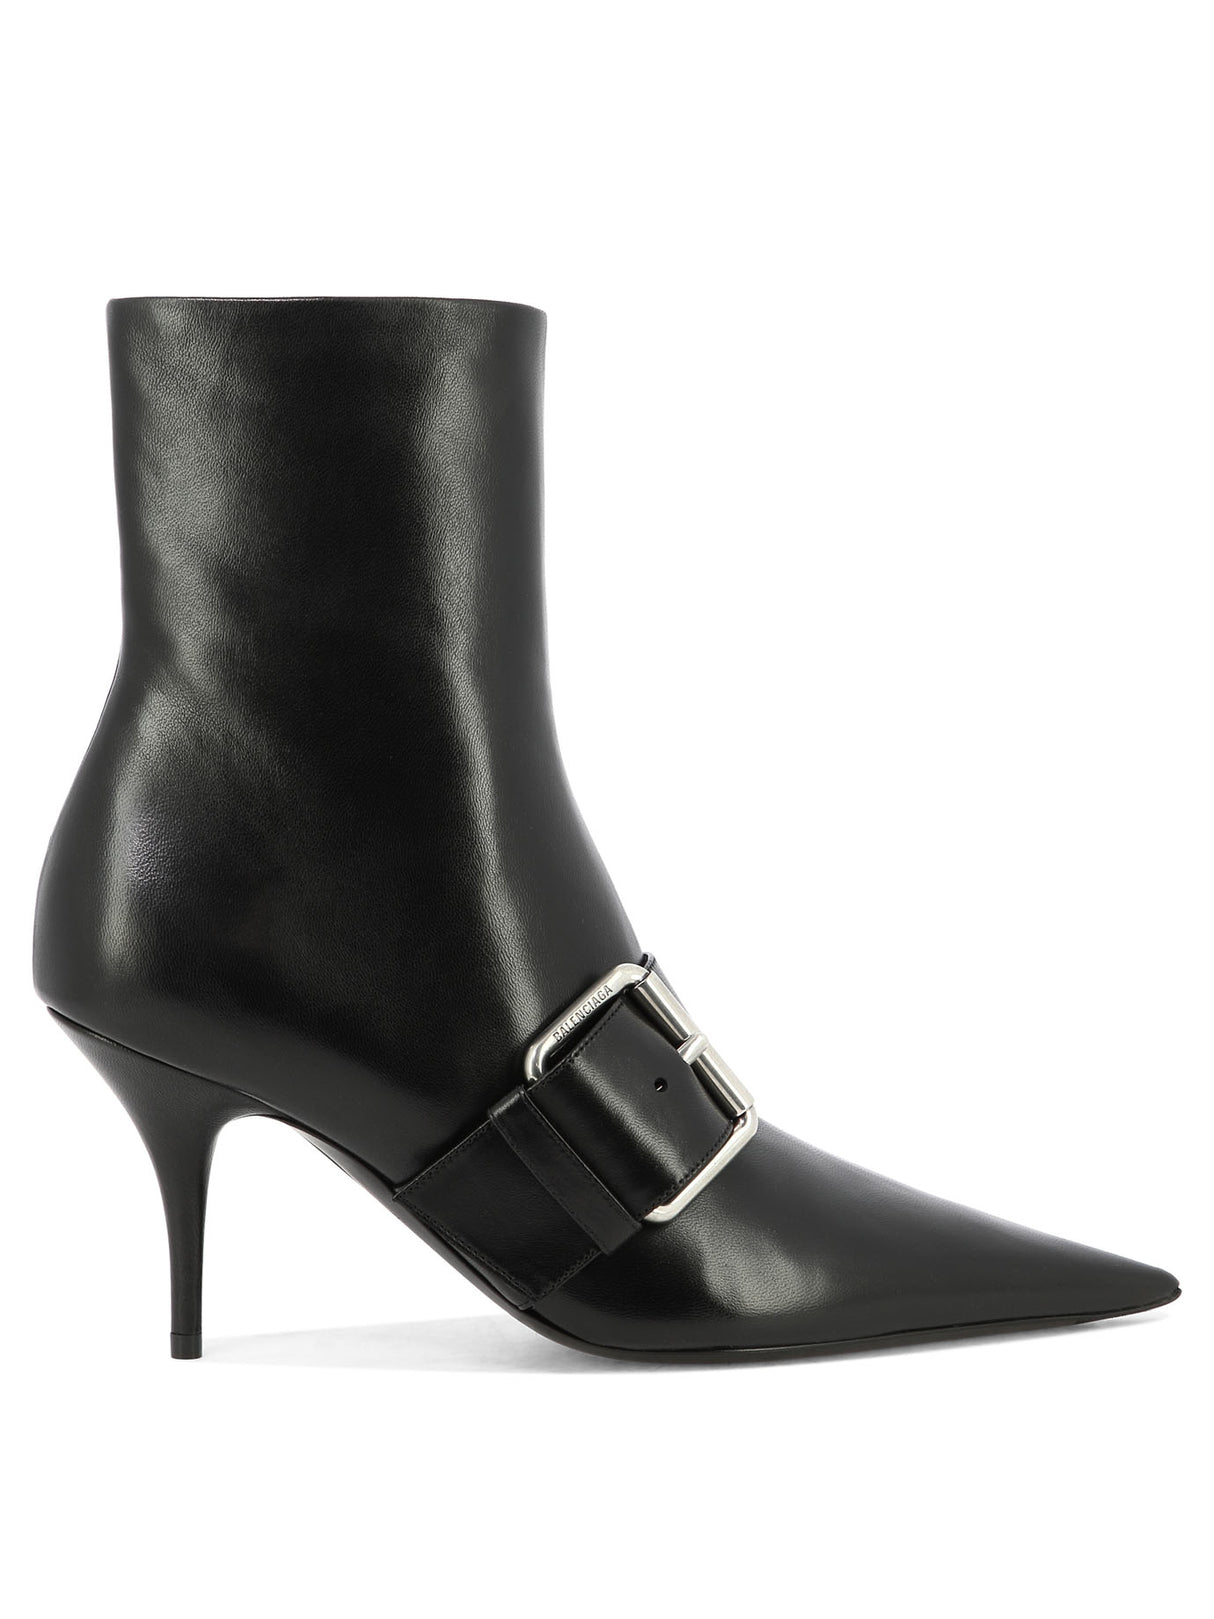 BALENCIAGA Sleek Ankle Boots for Women